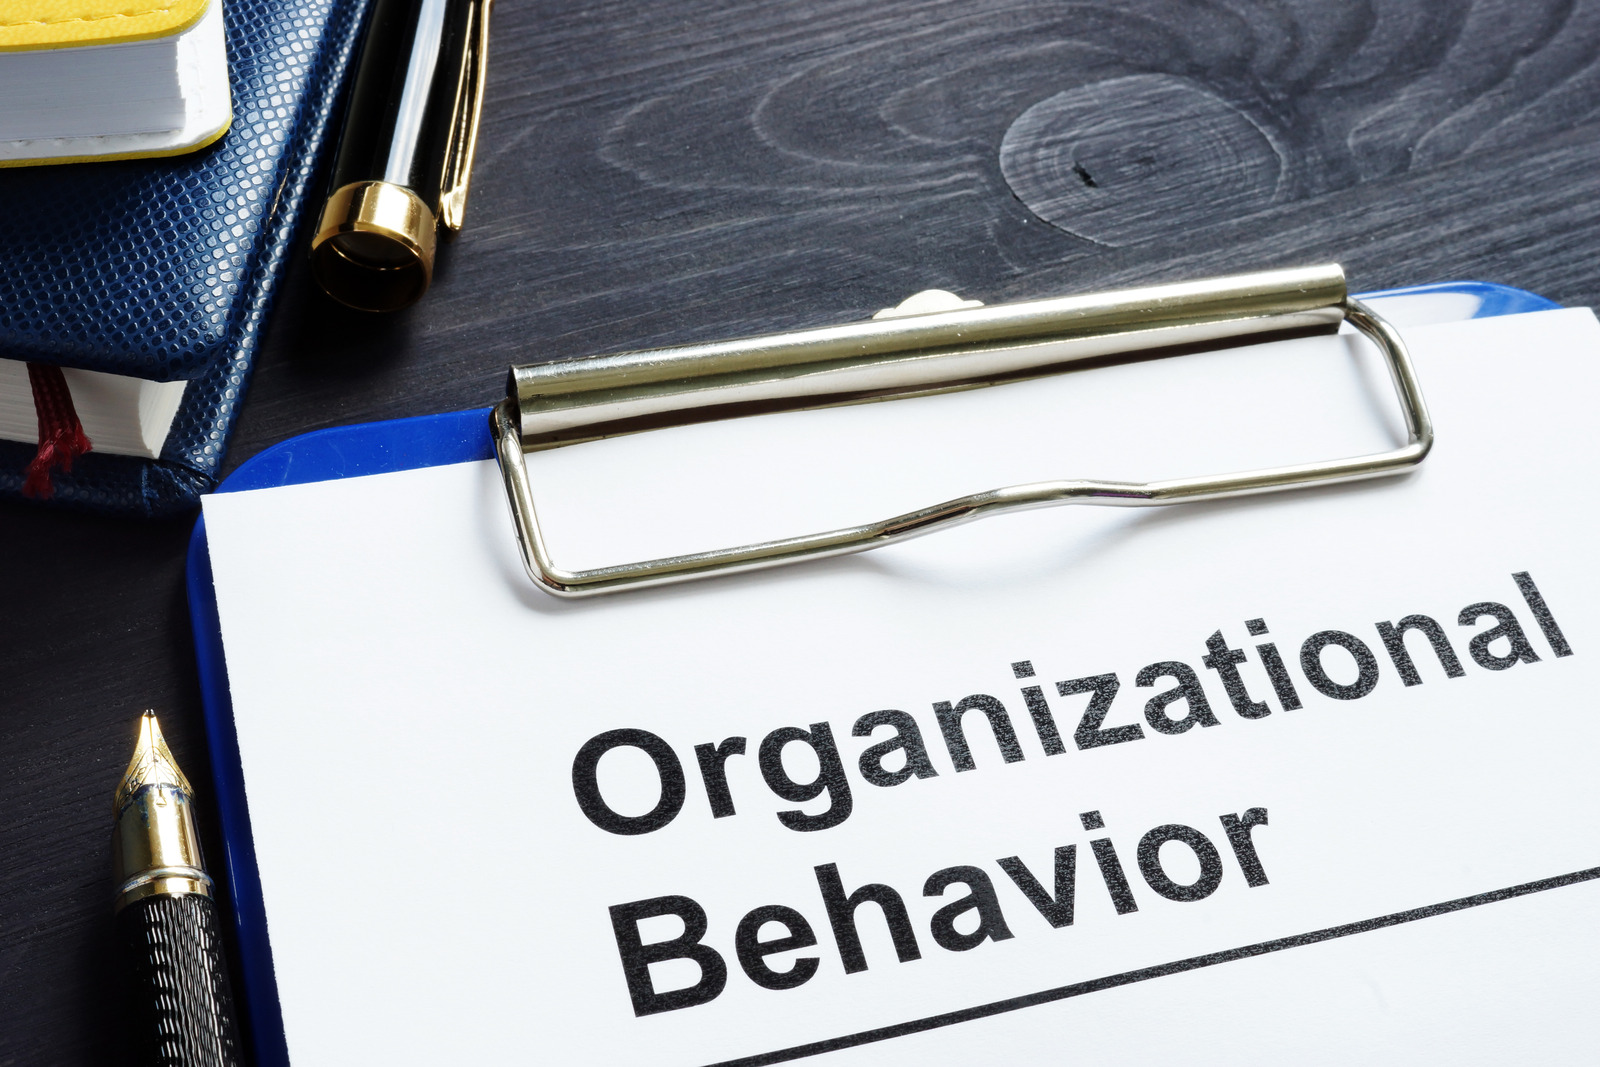 Organizational Behavior report on an office desk.